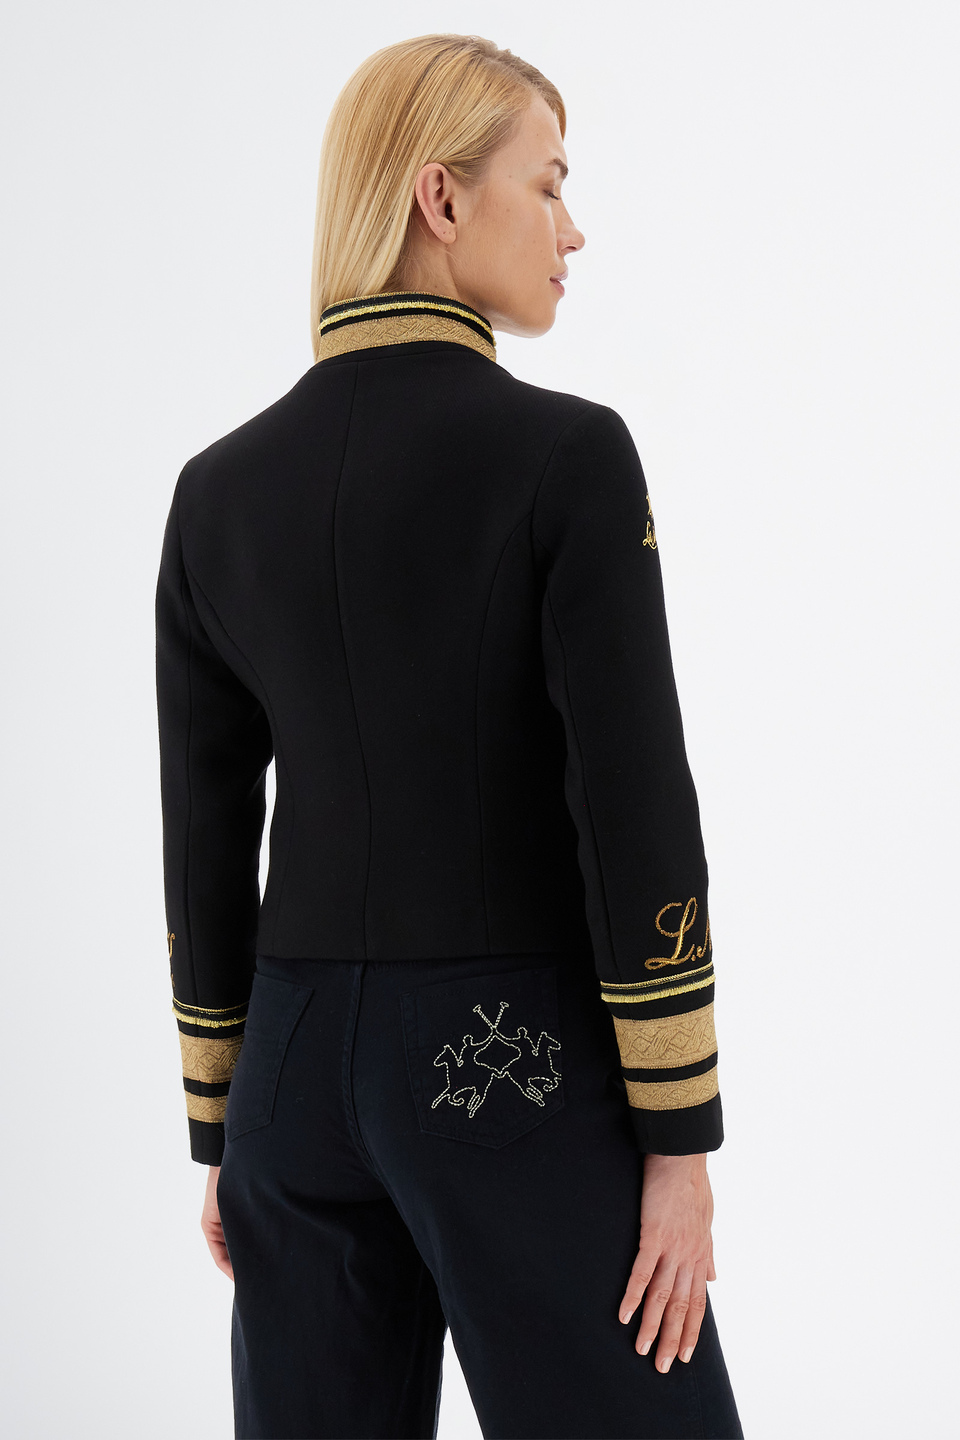 Damen Regular Fit einreihige Blazer Guards Jacke | La Martina - Official Online Shop